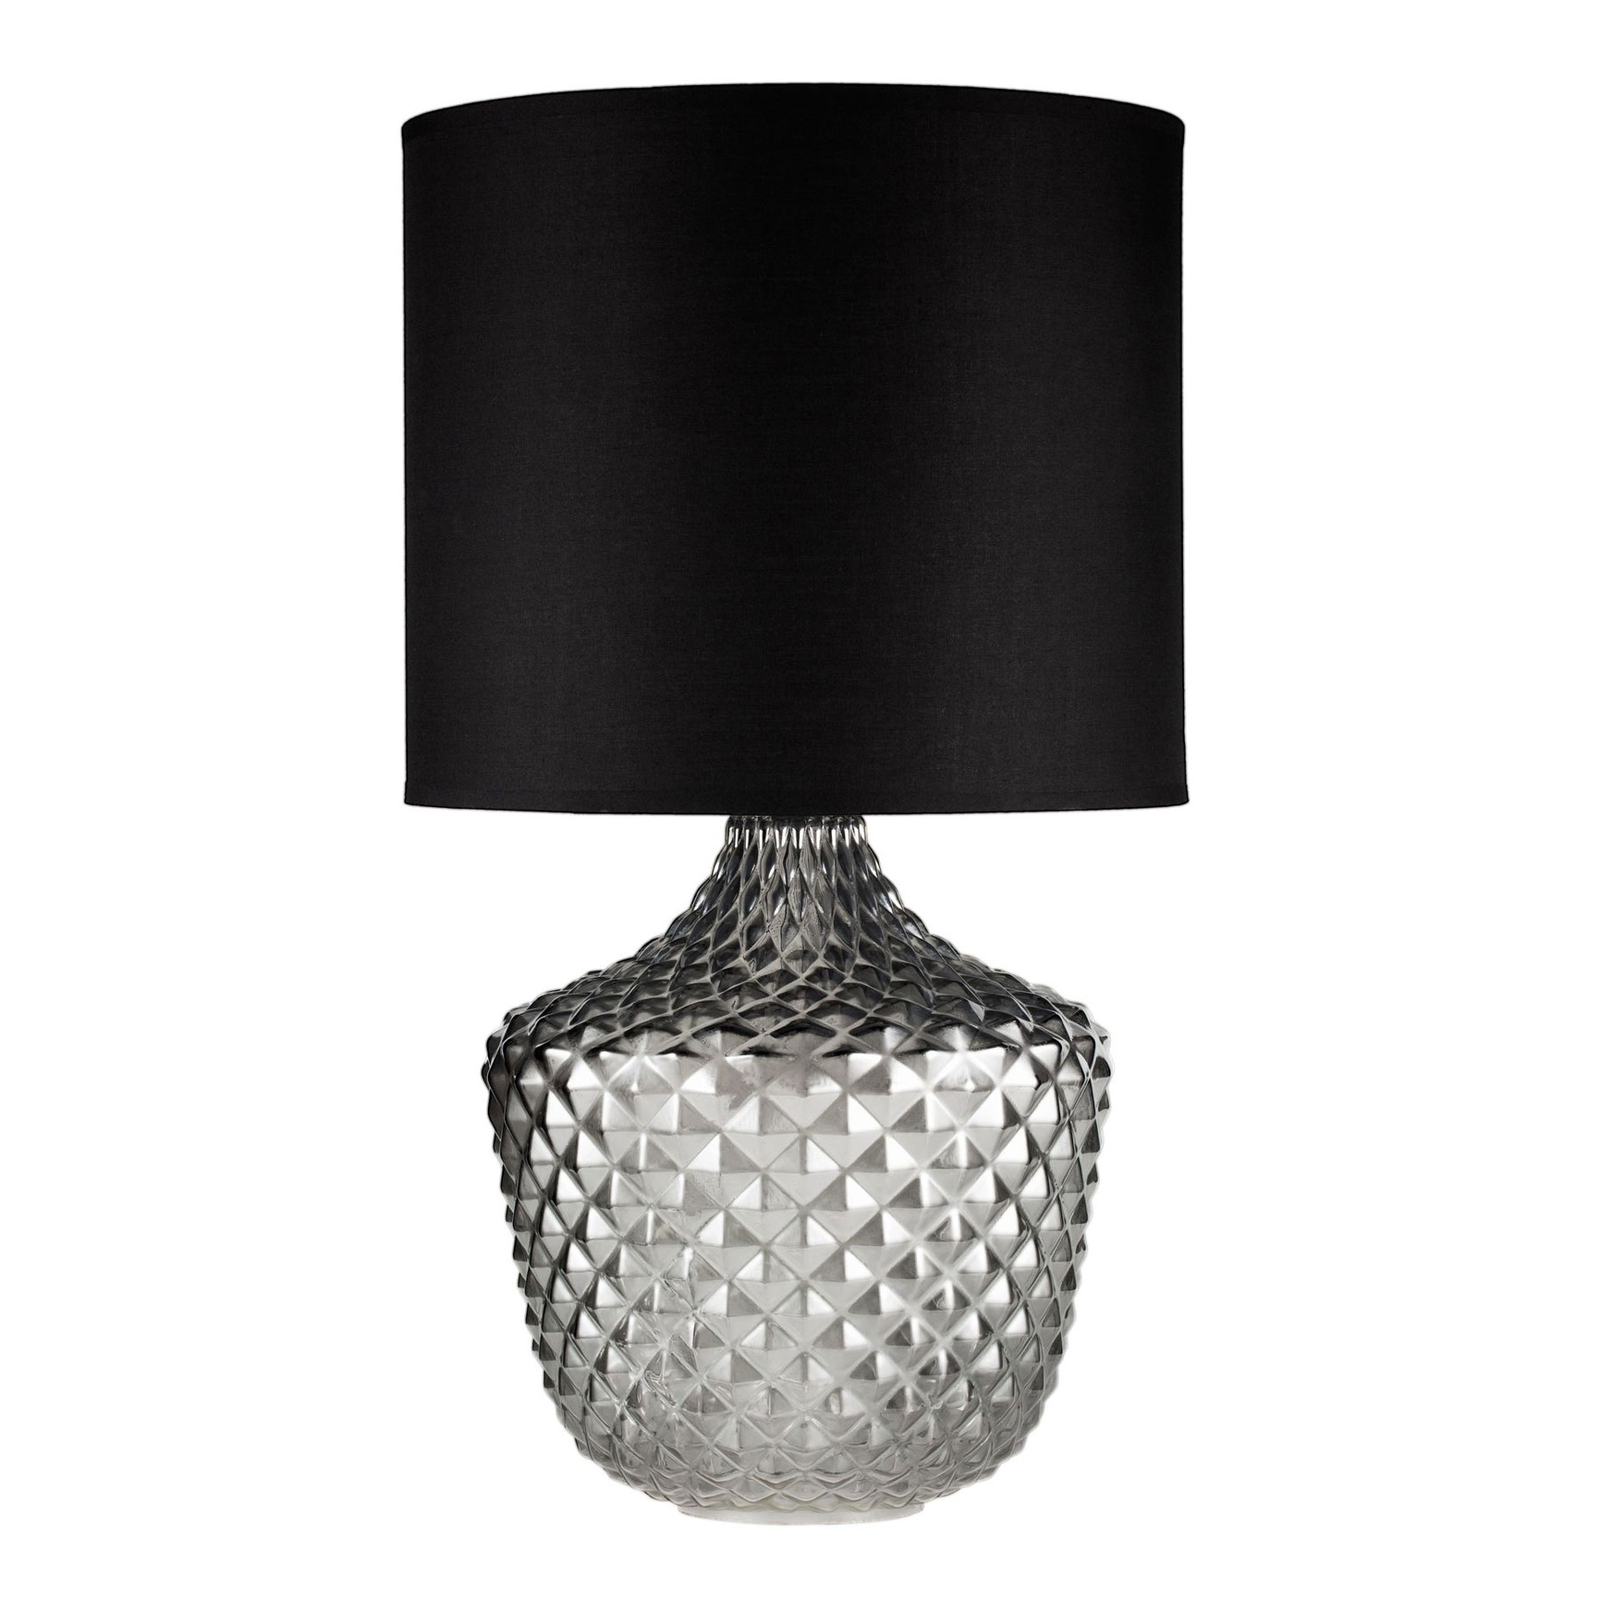 Pauleen Brilliant Jewel bordslampa med glasfot